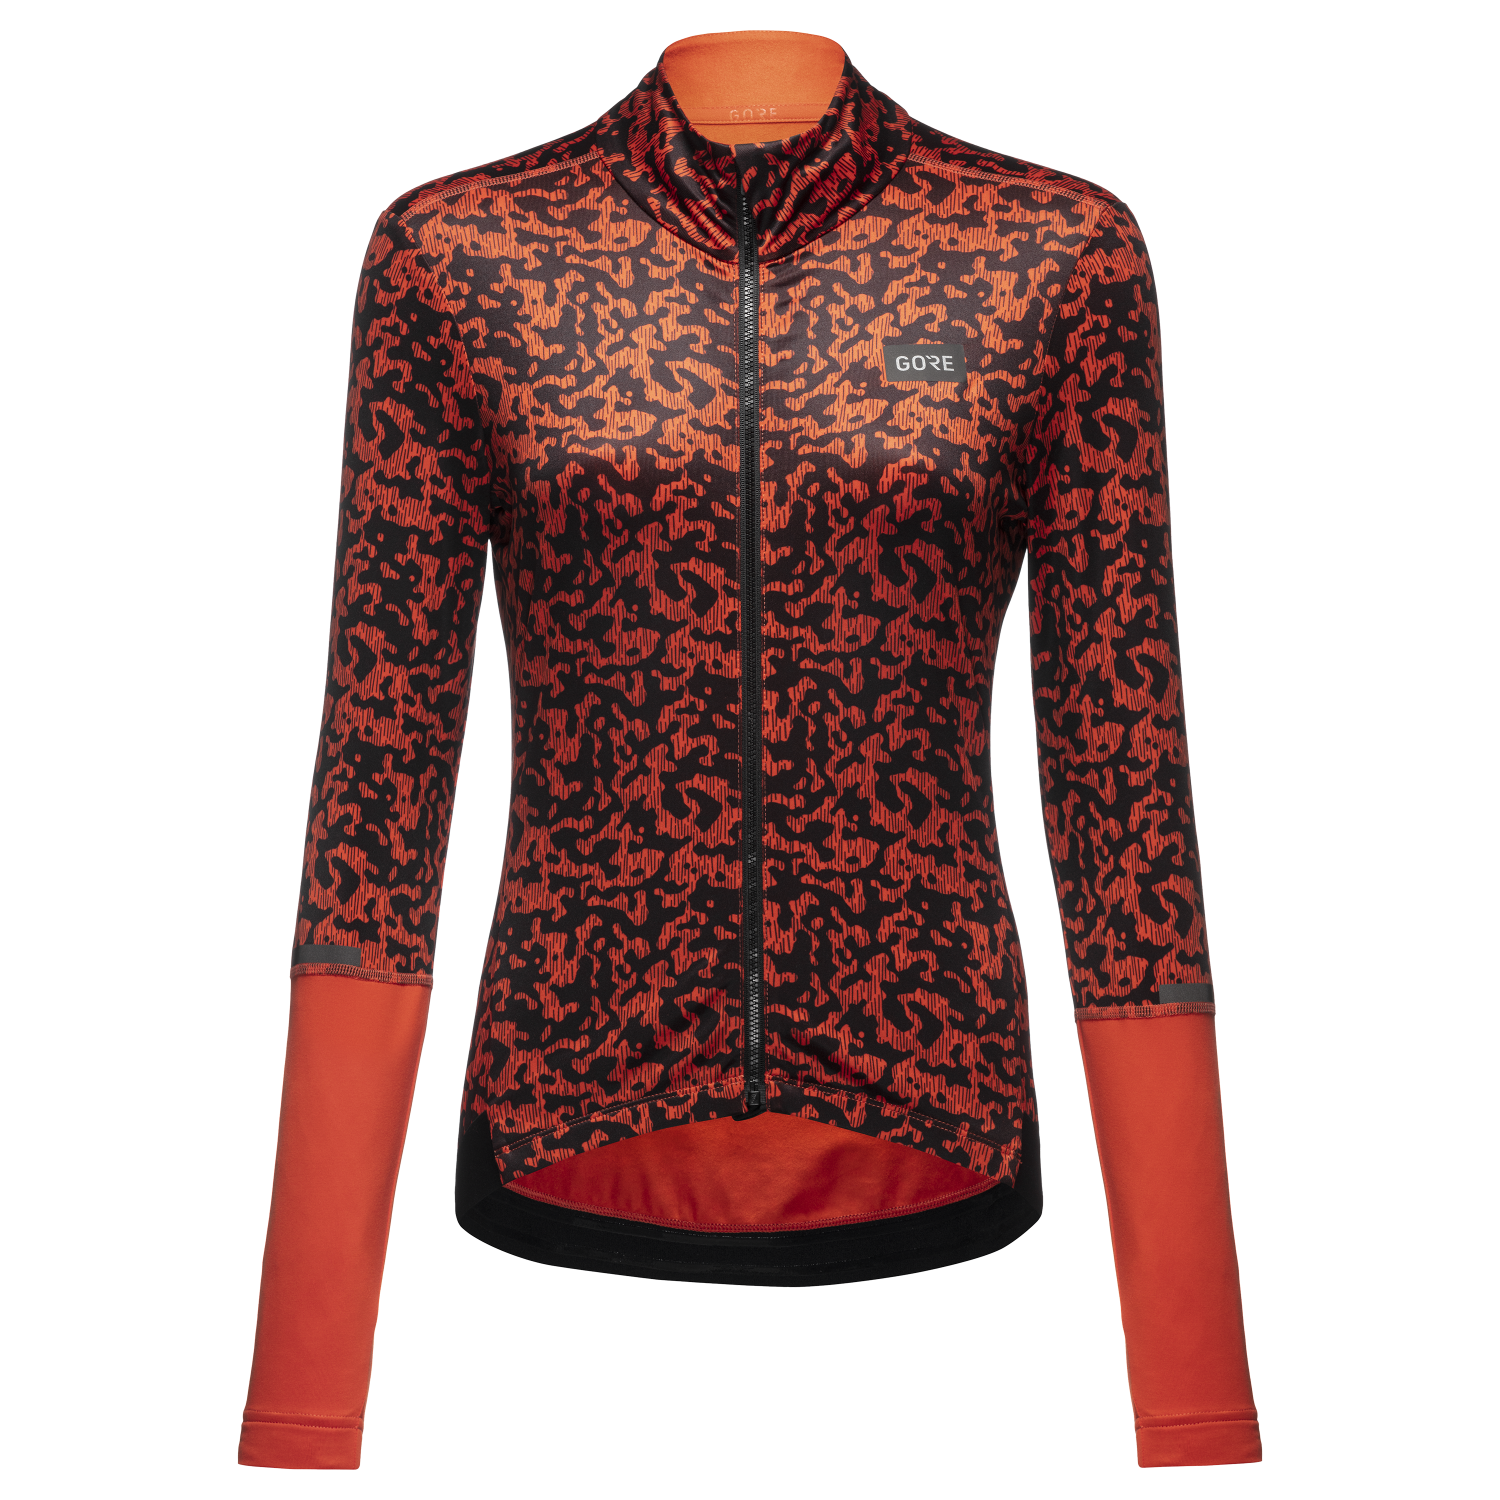 GOREWEAR Progress Thermo Rain Camo Cycling Jersey Women's in Fireball/Black | Medium (8-10) | Form fit